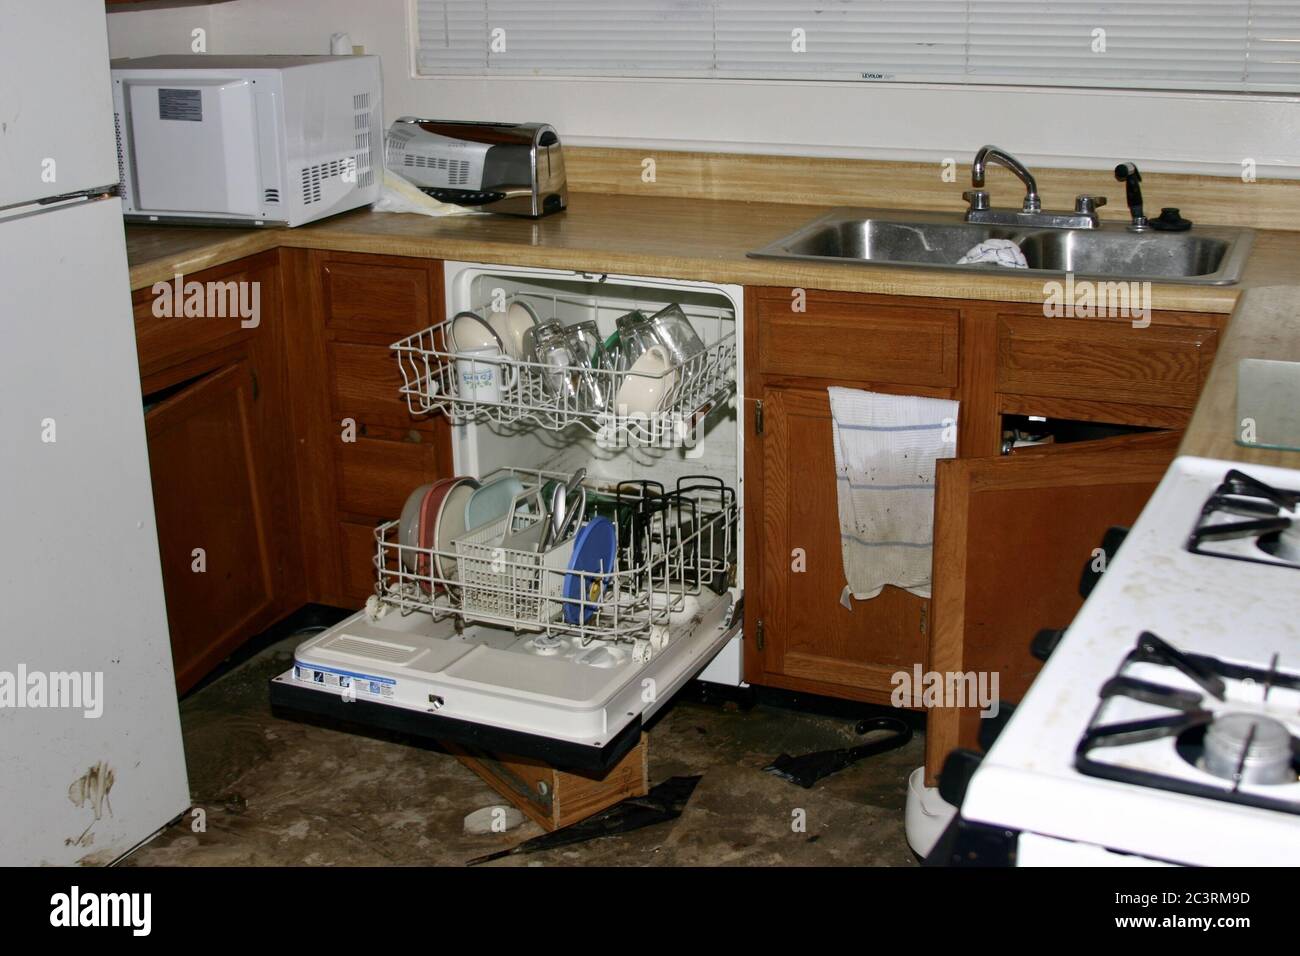 BILOXI, UNITED STATES - Sep 07, 2005: Hurricane Katrina reached kitchen and damaged it. Stock Photo